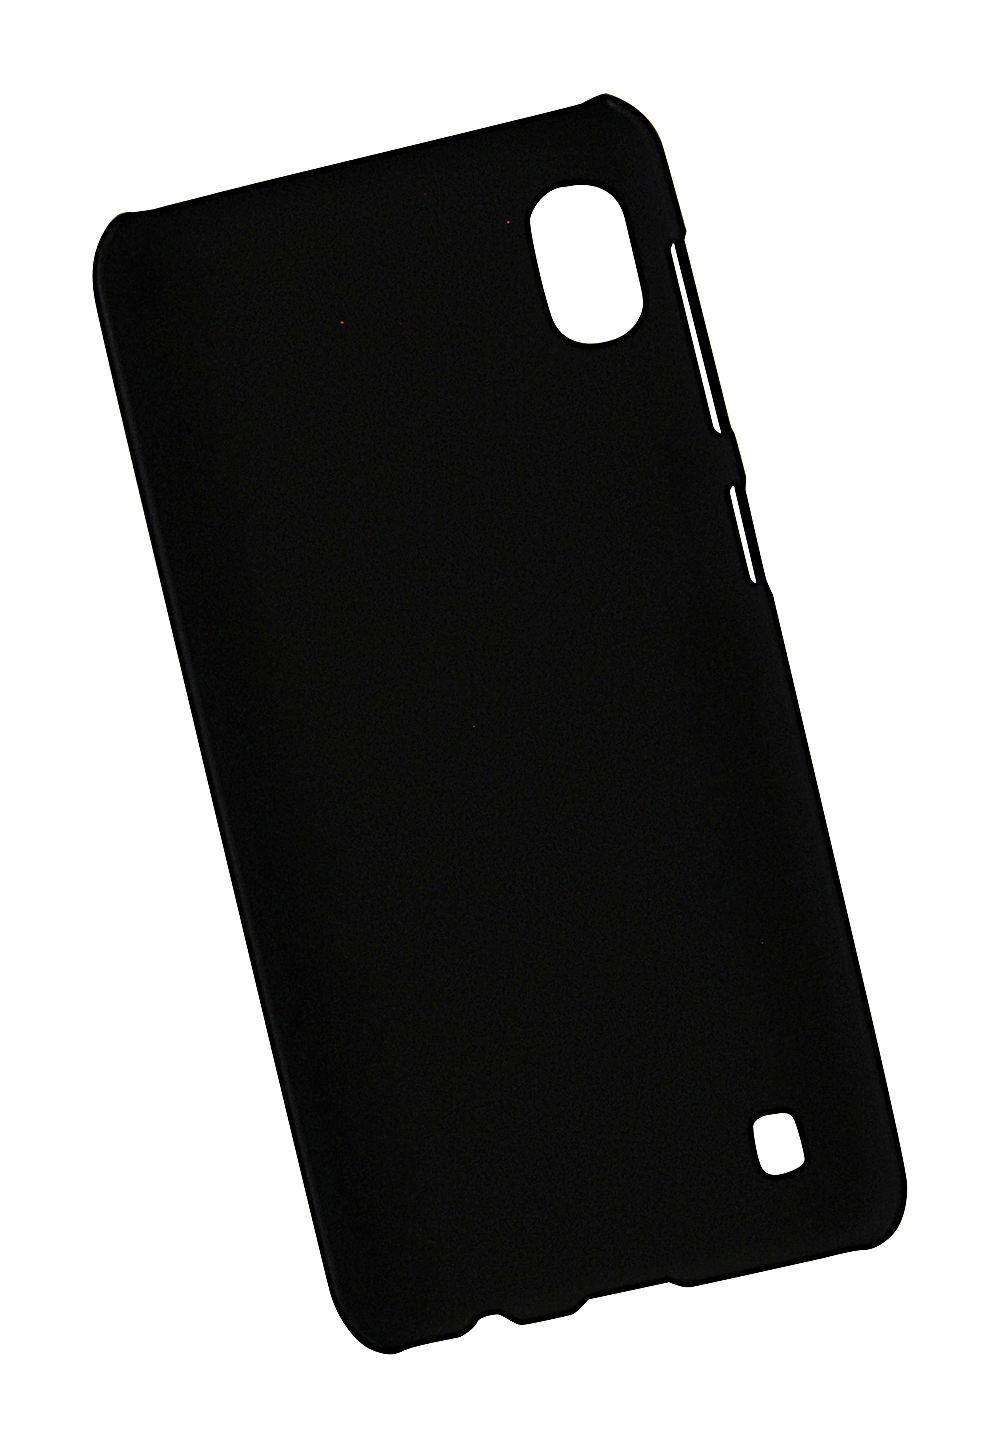 CoverIn Skimblocker Design Magneettilompakko Samsung Galaxy A10 (A105F/DS)